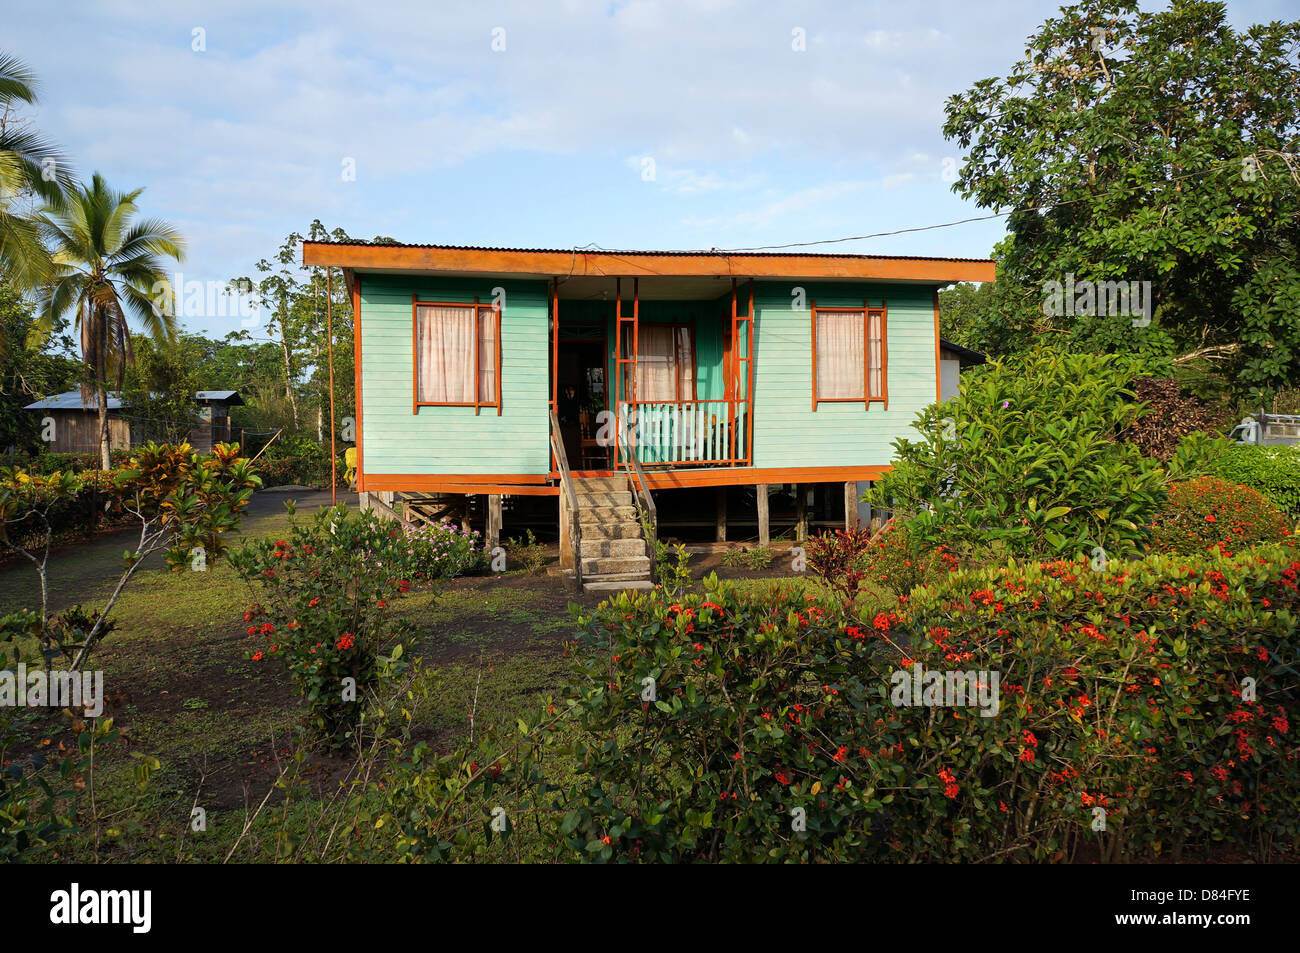 Typical rustic Caribbean house in Costa Rica, Manzanillo, Central America Stock Photo